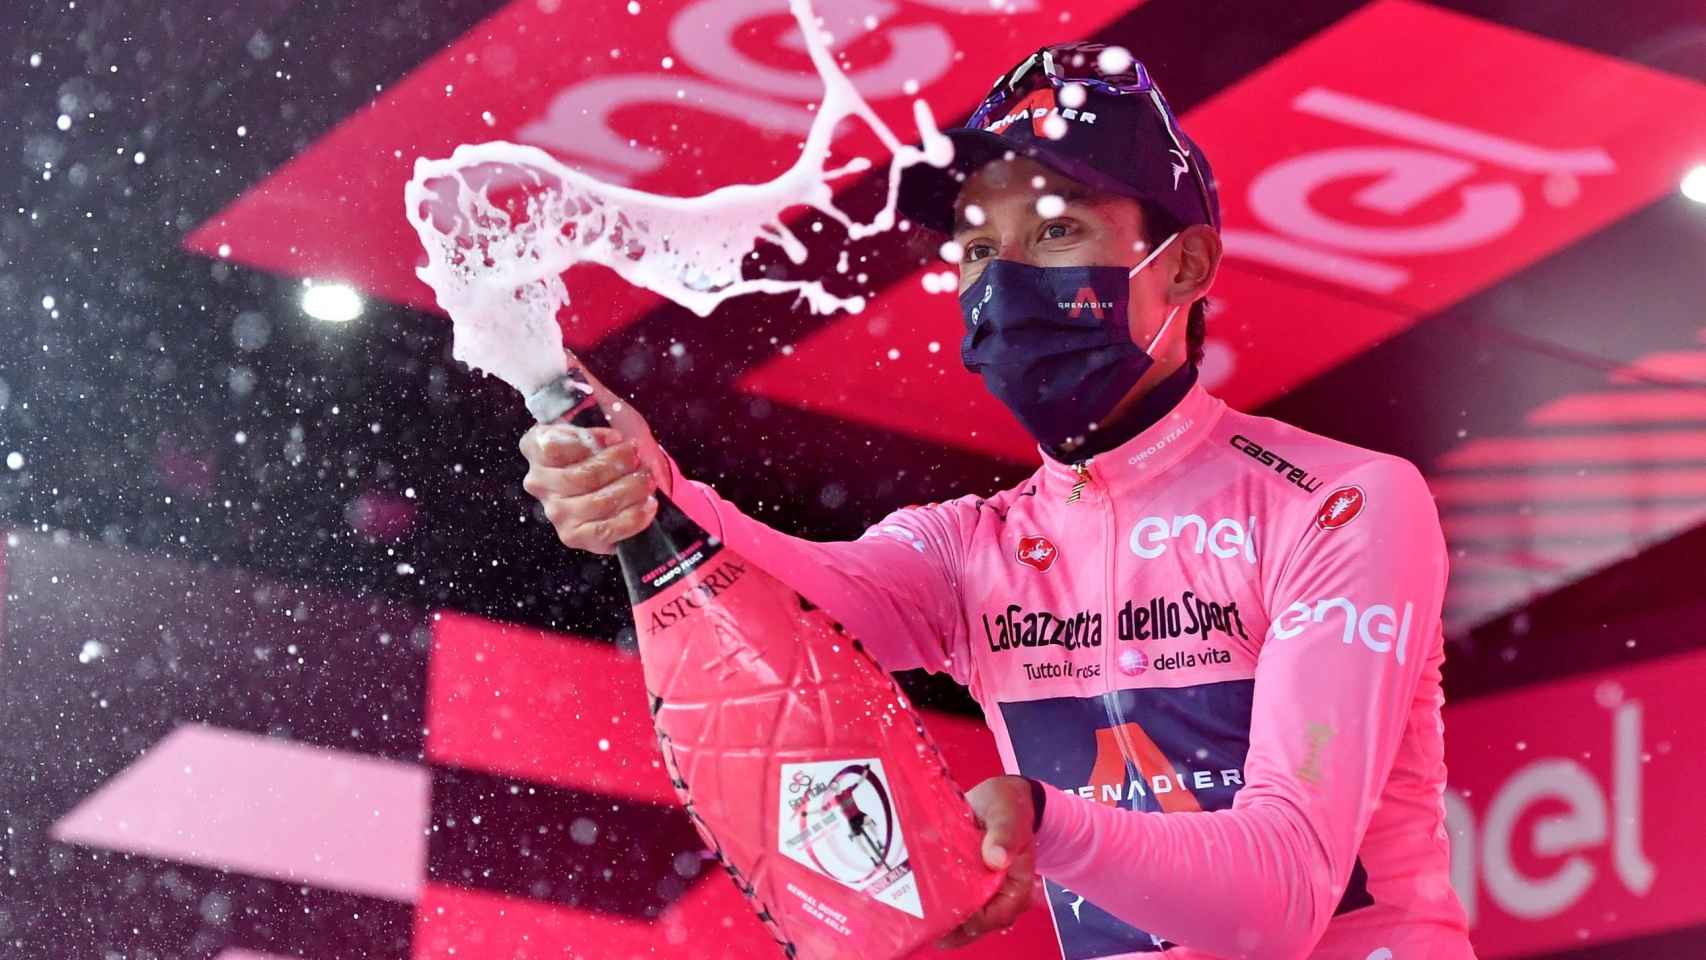 Egan Bernal, en el podio de la novena etapa del Giro de Italia